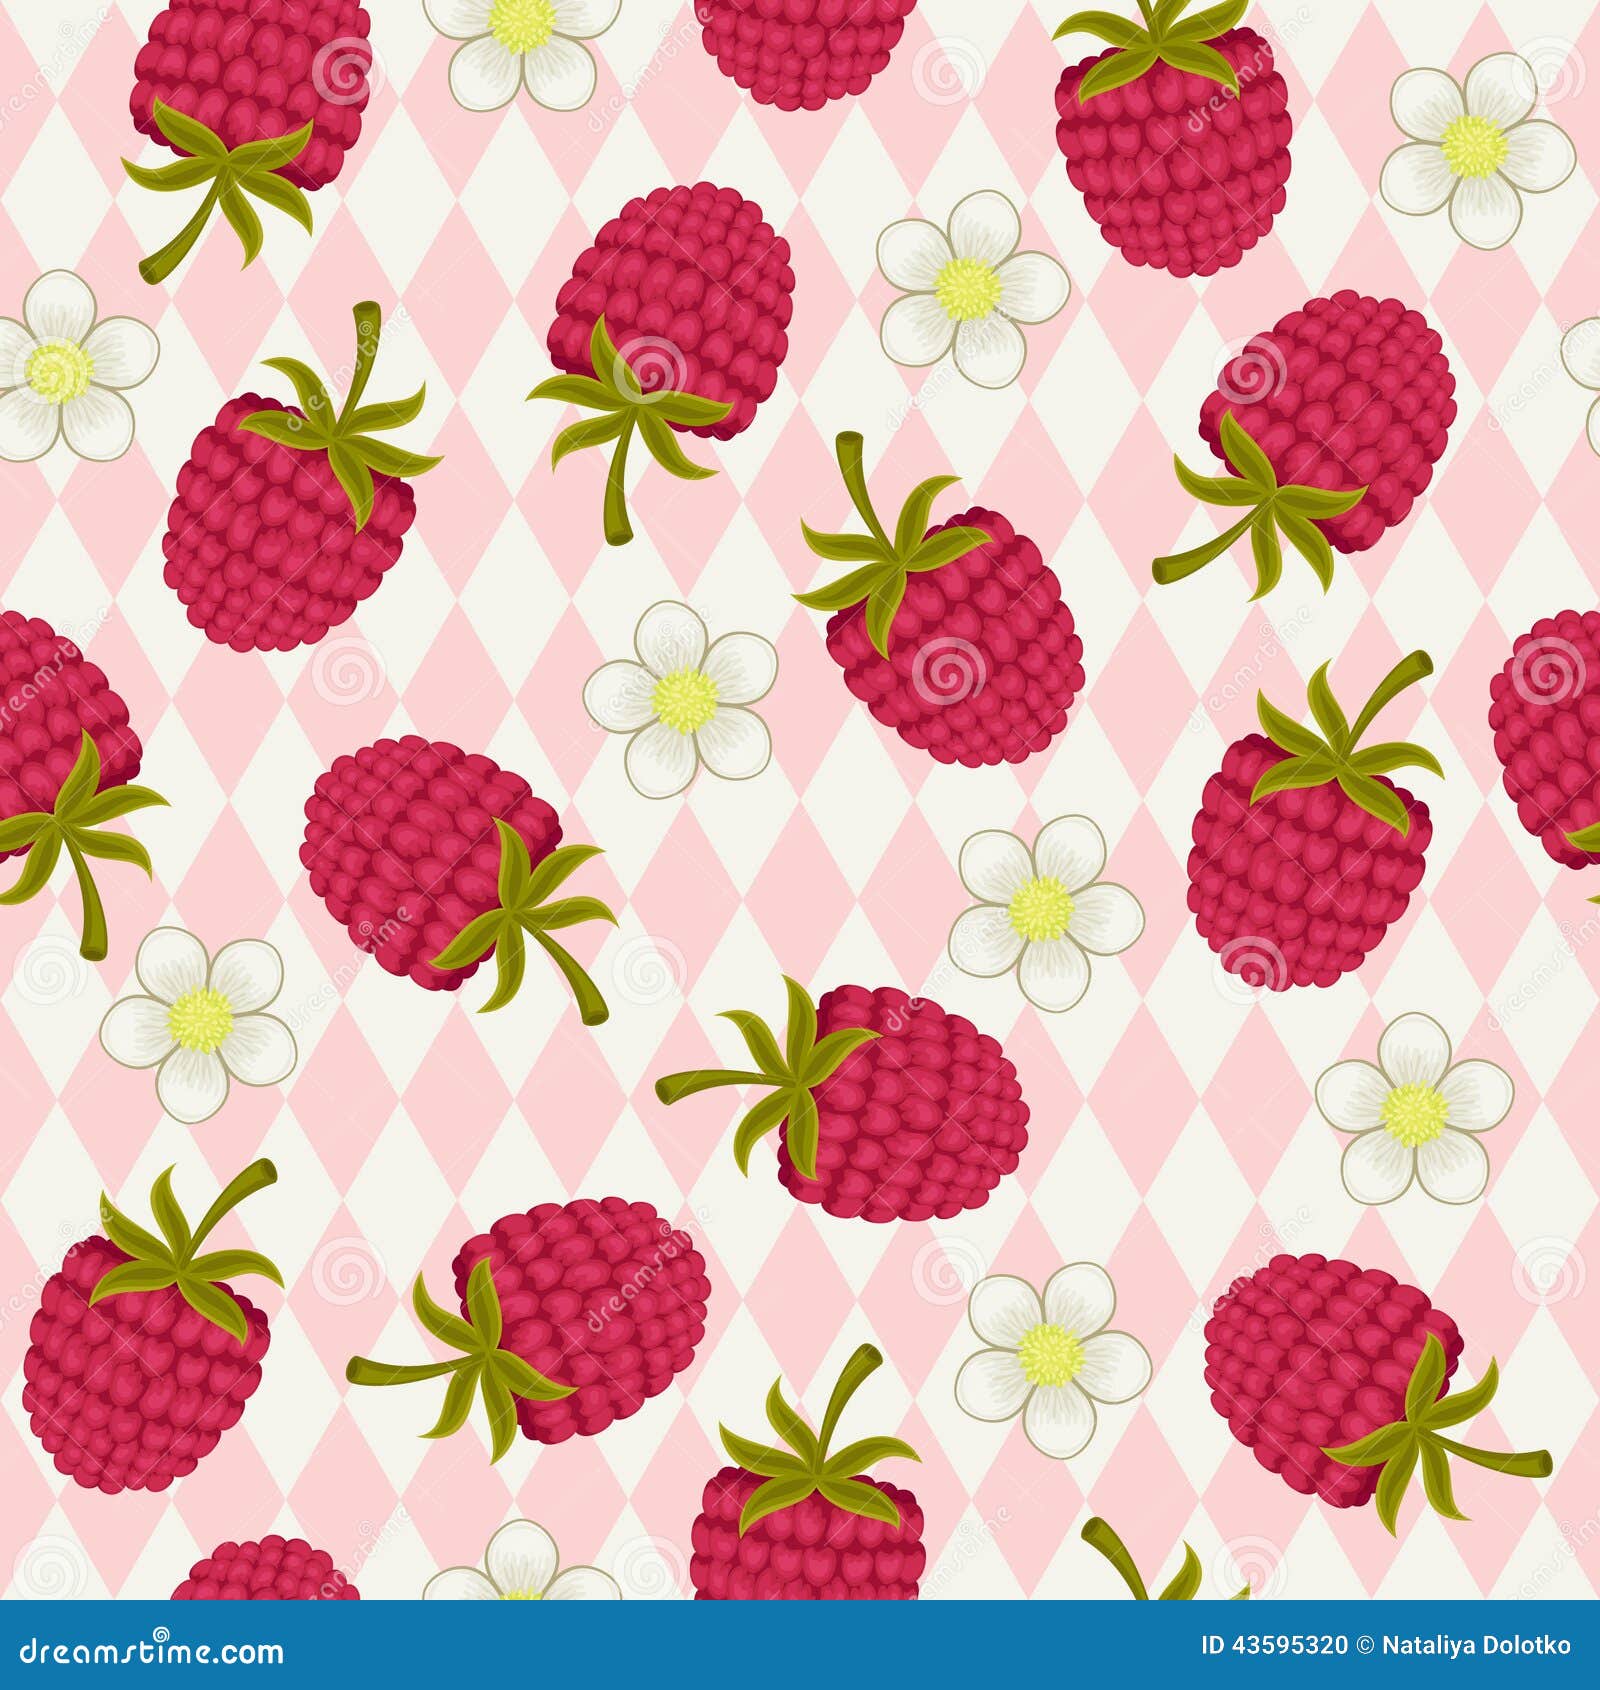 Raspberry Wallpaper Stock Illustrations  7754 Raspberry Wallpaper Stock  Illustrations Vectors  Clipart  Dreamstime